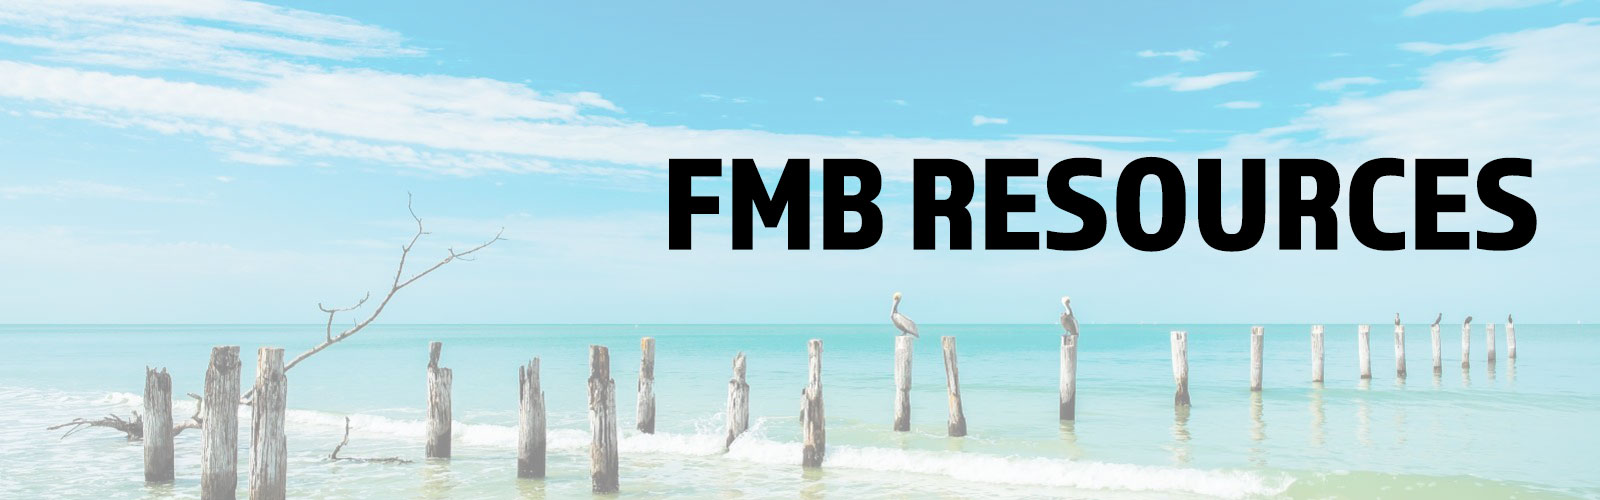 FMB-RESOURCES-HEADER-IMAGE